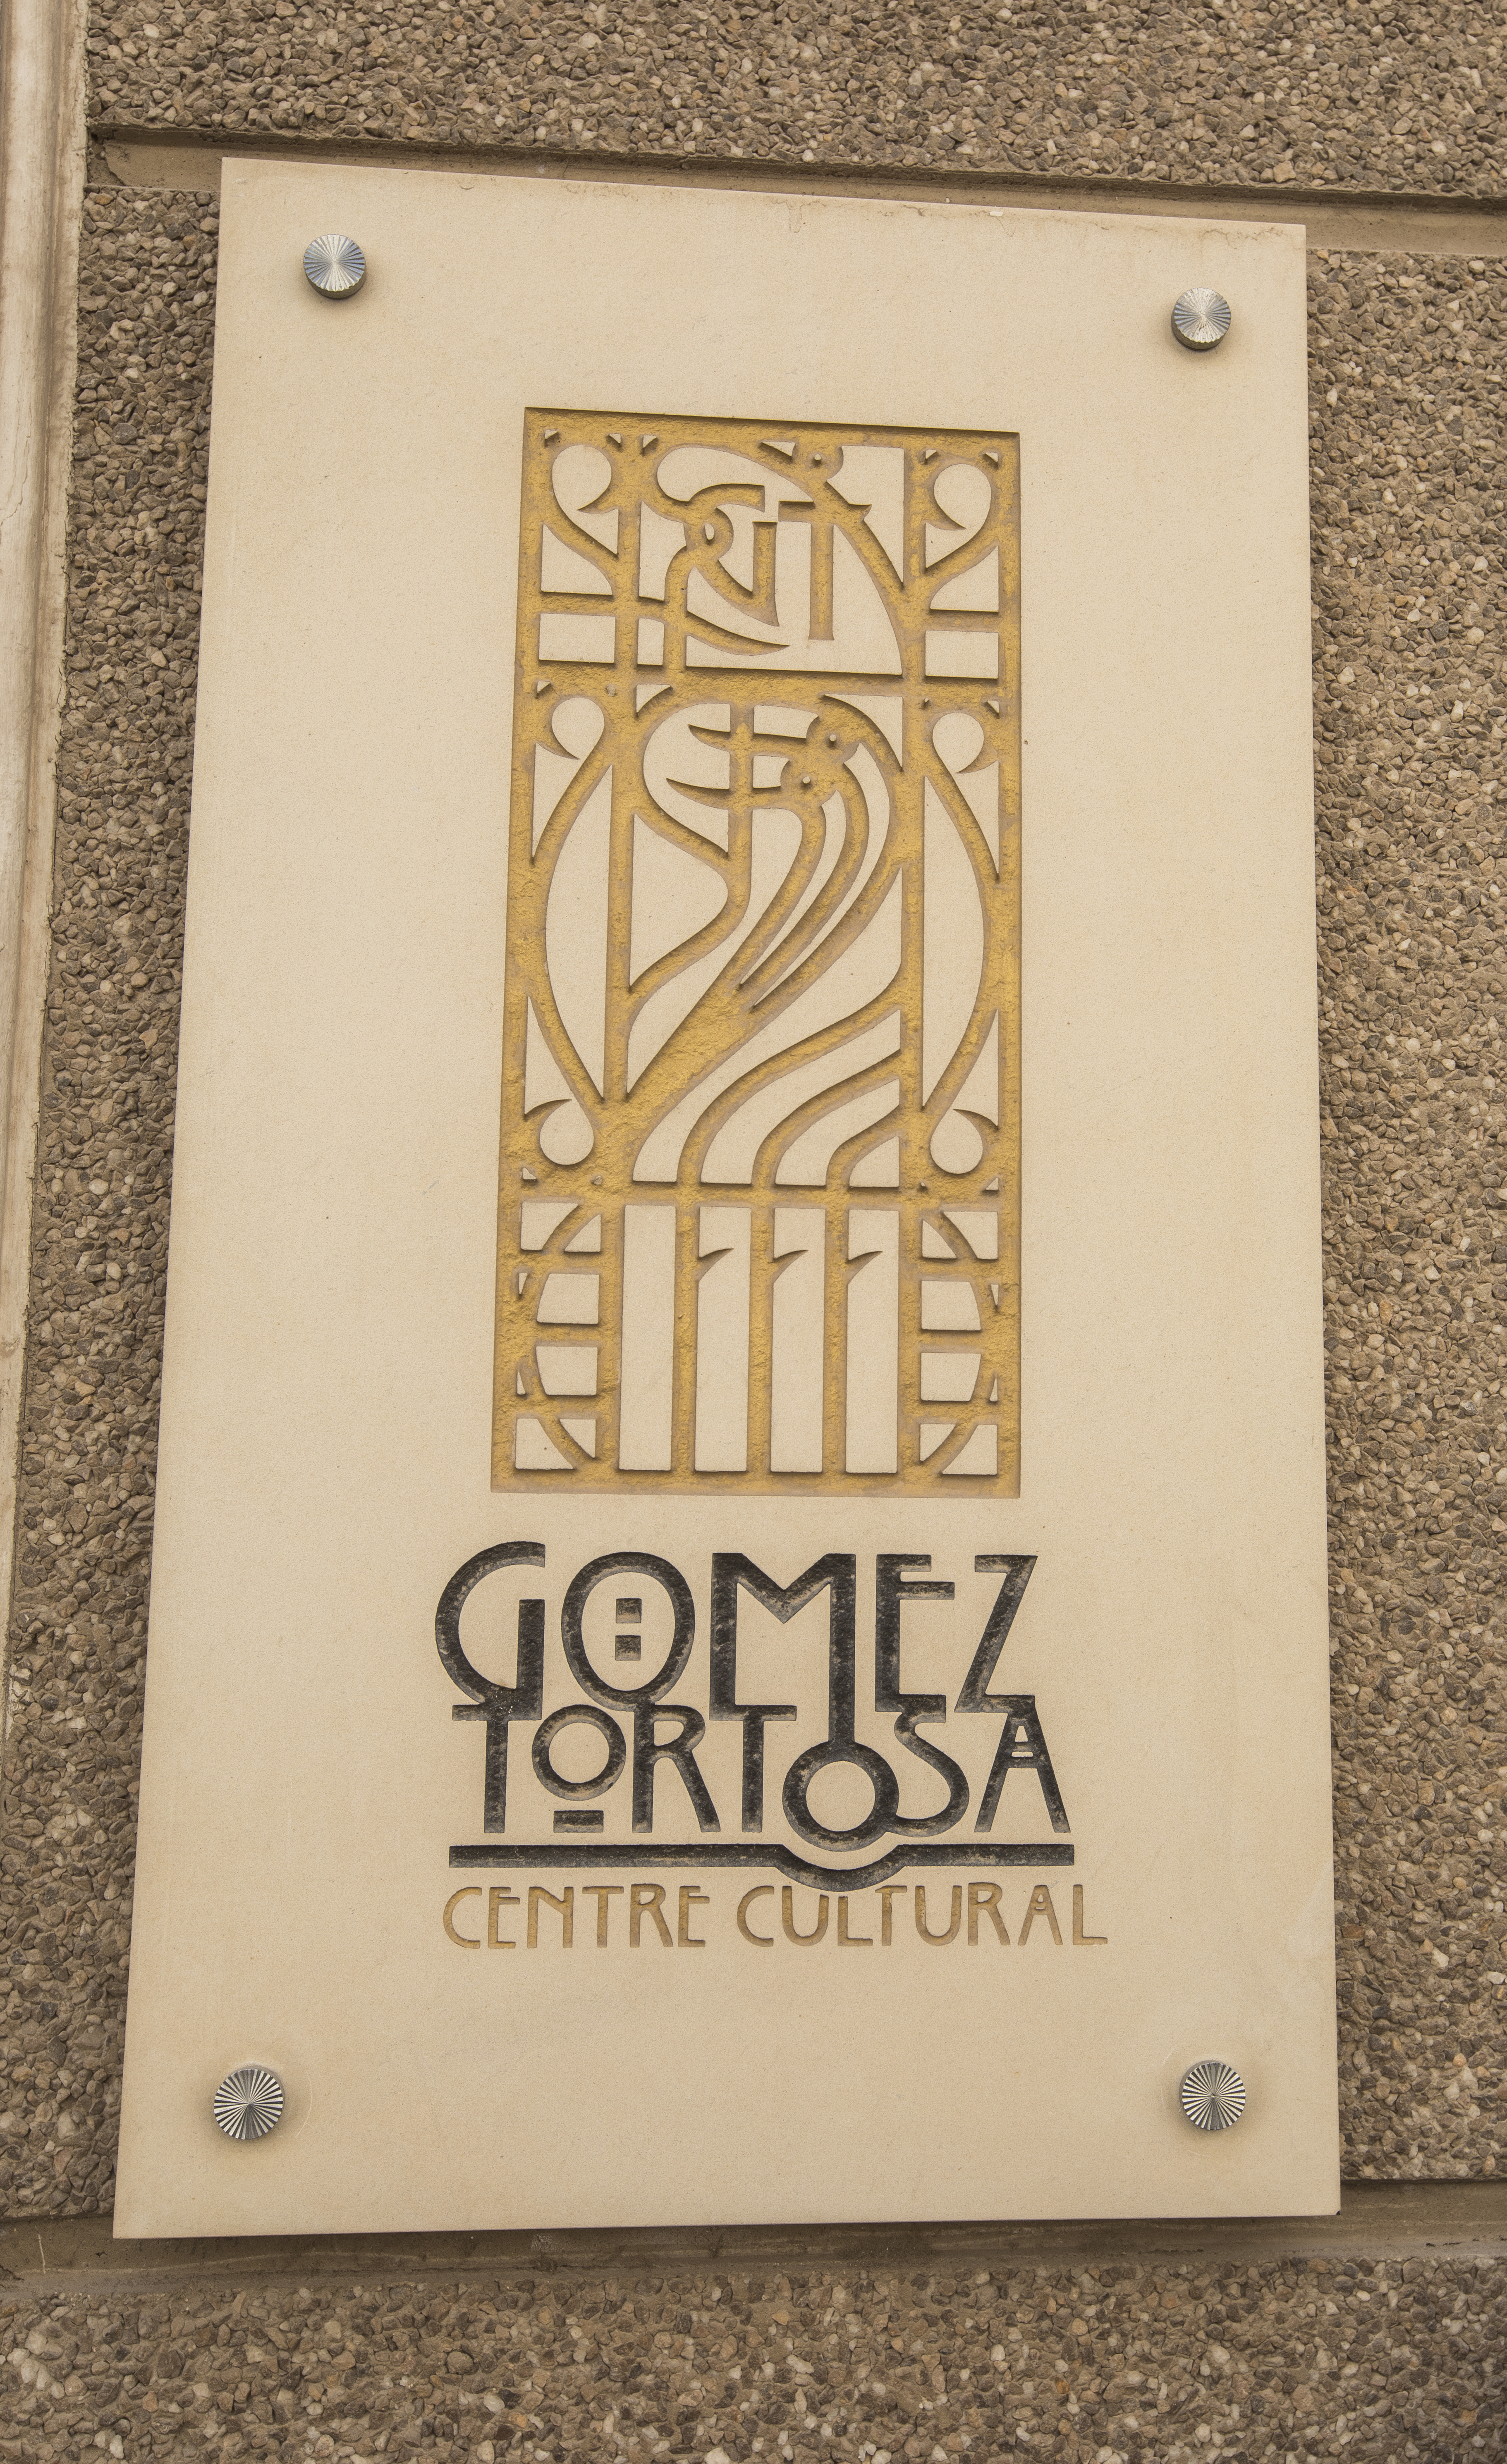 Centre Cultural Gómez Tortosa